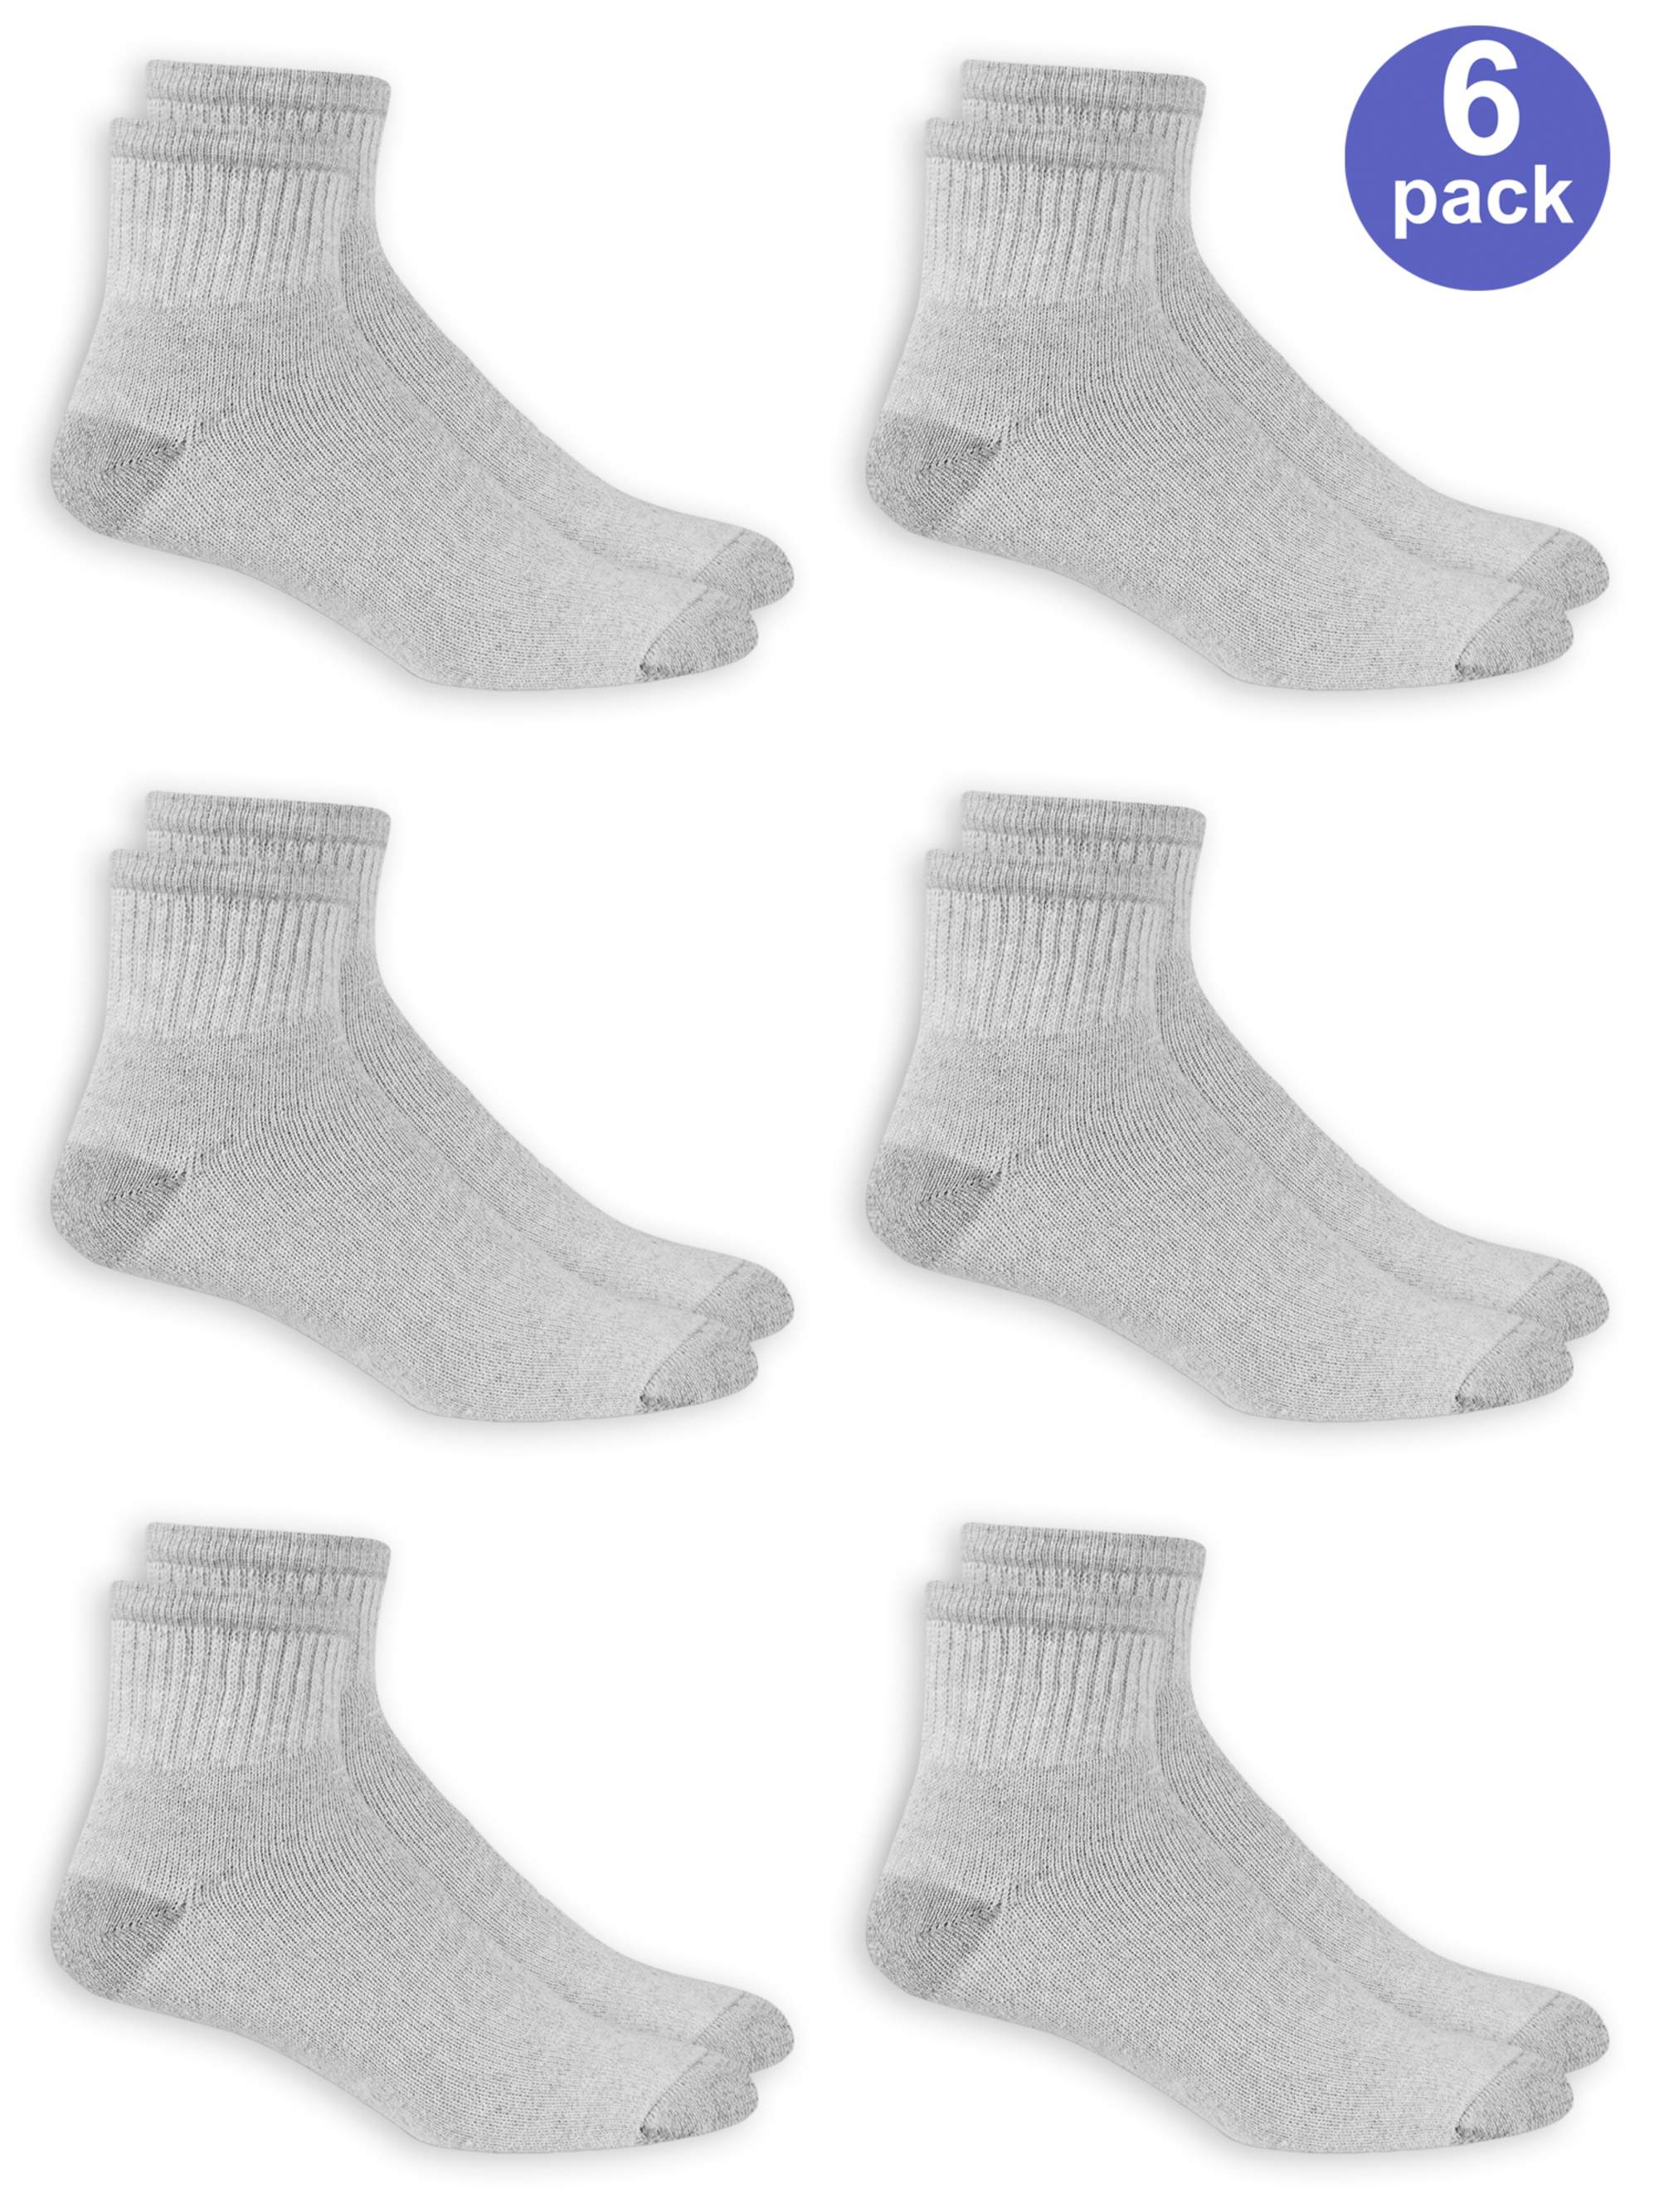 men's athletic ankle socks